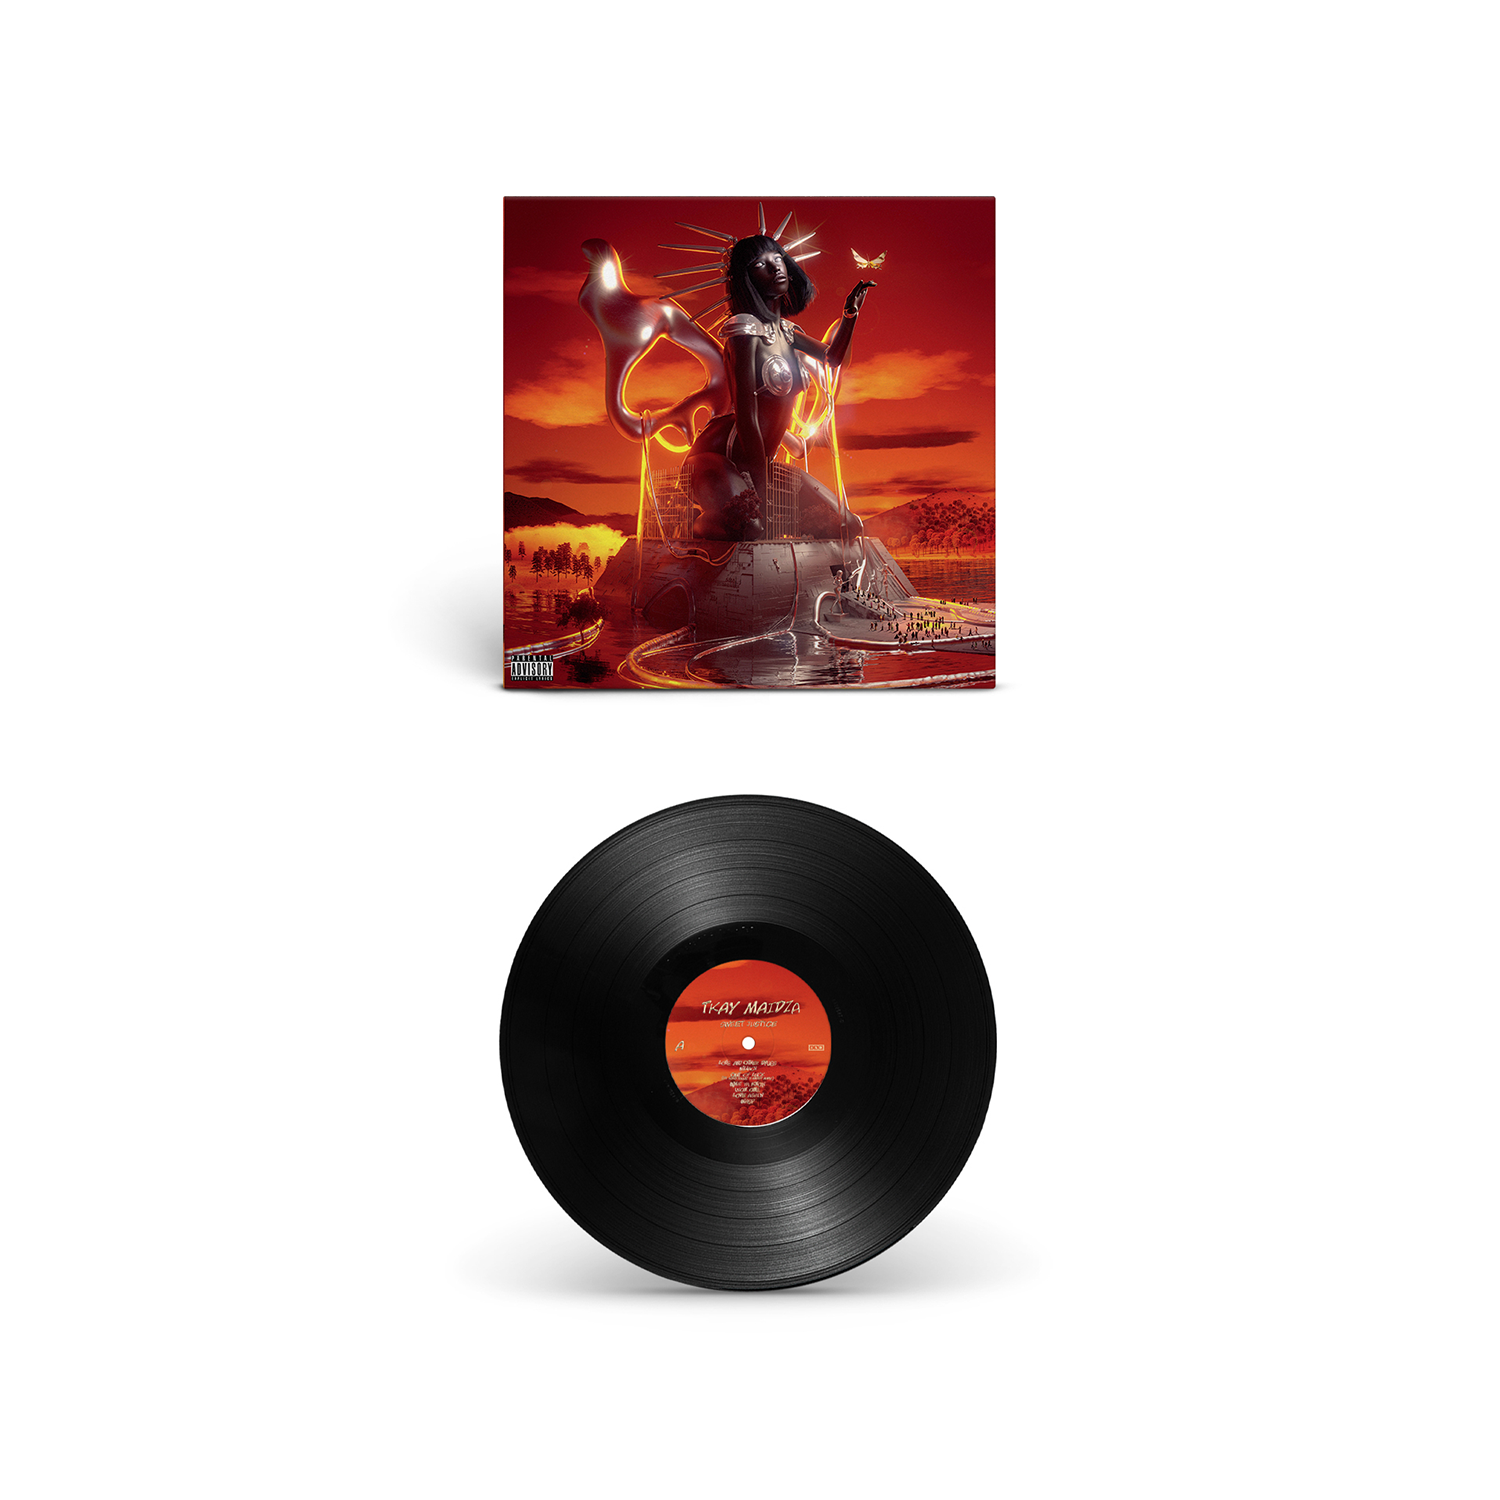 Sweet Justice: Vinyl LP + Limited Edition Bonus 7"